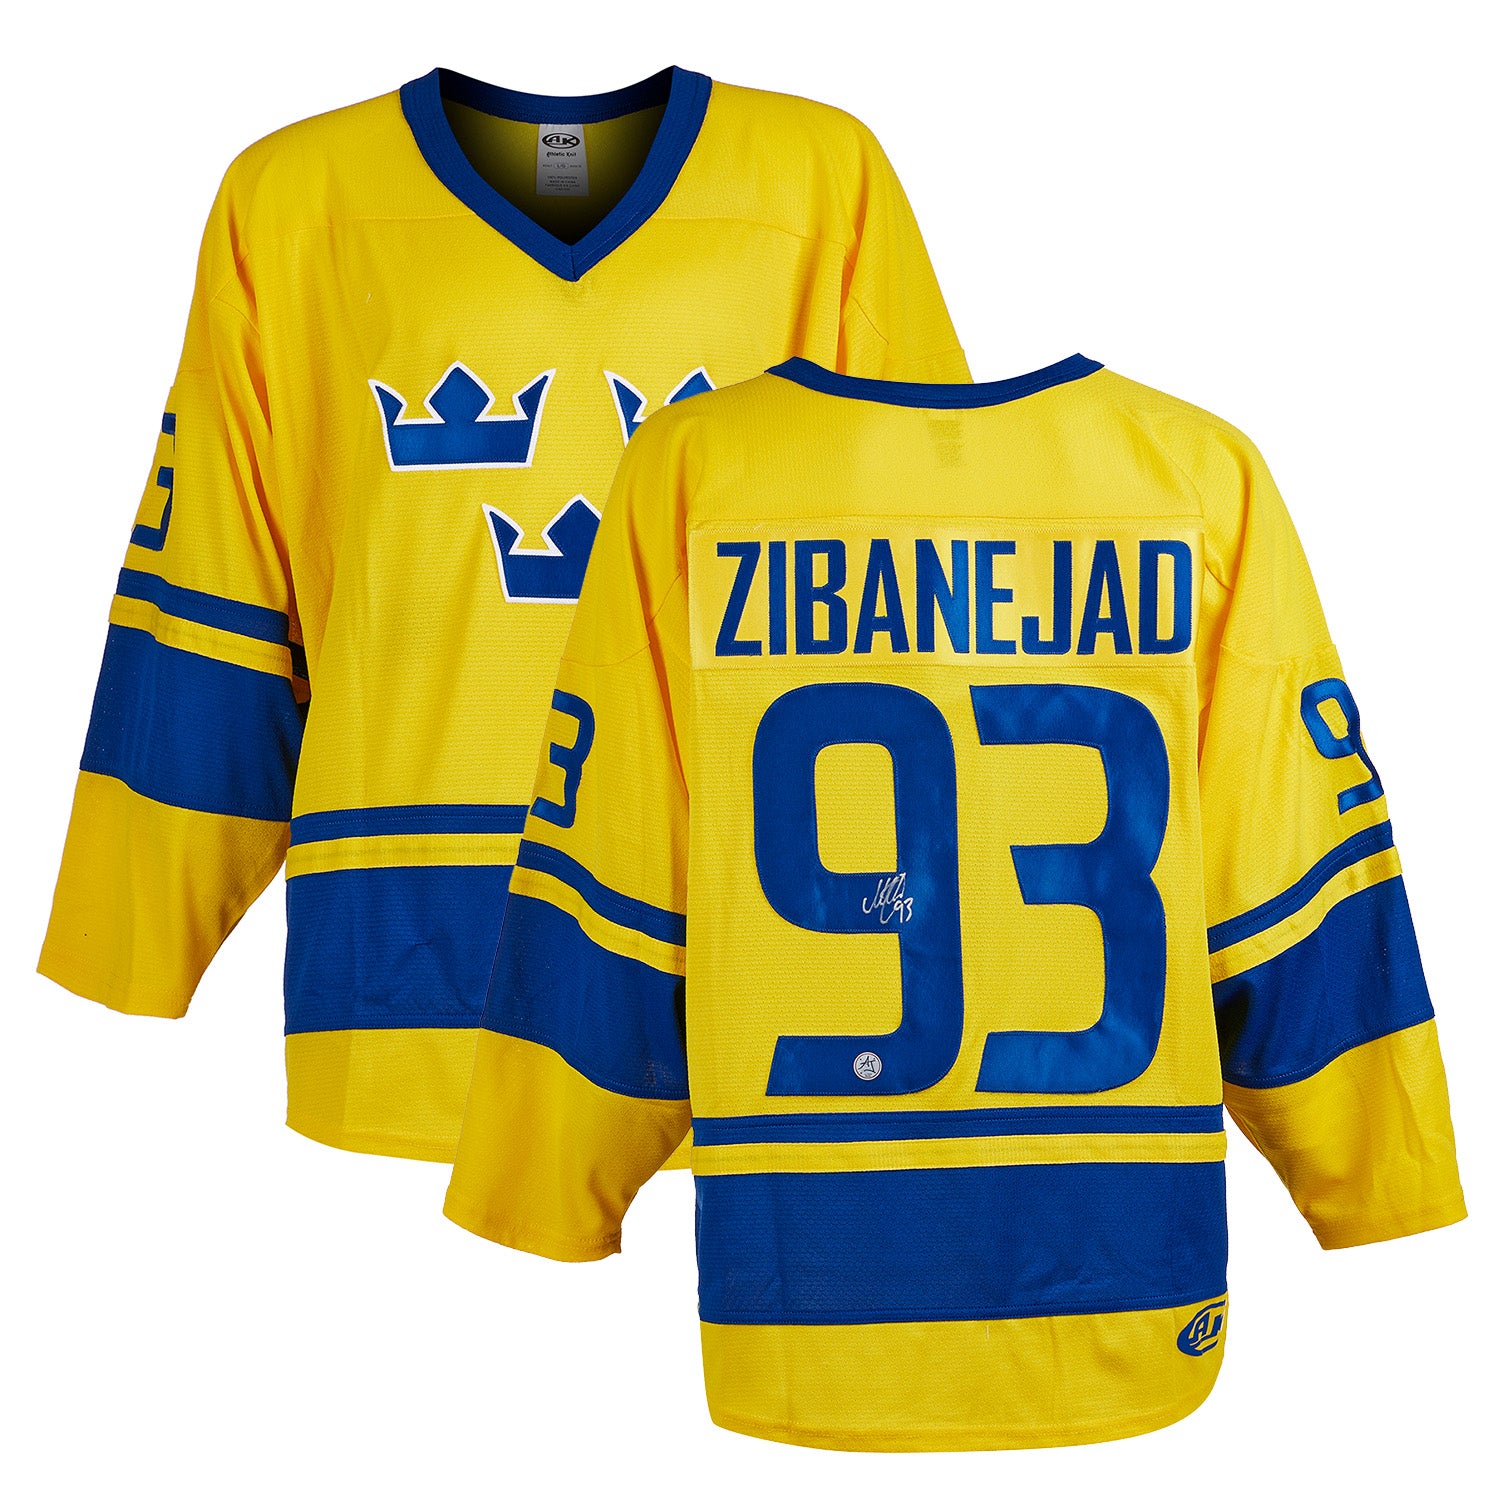 Mika Zibanejad Team Sweden Autographed Hockey Jersey